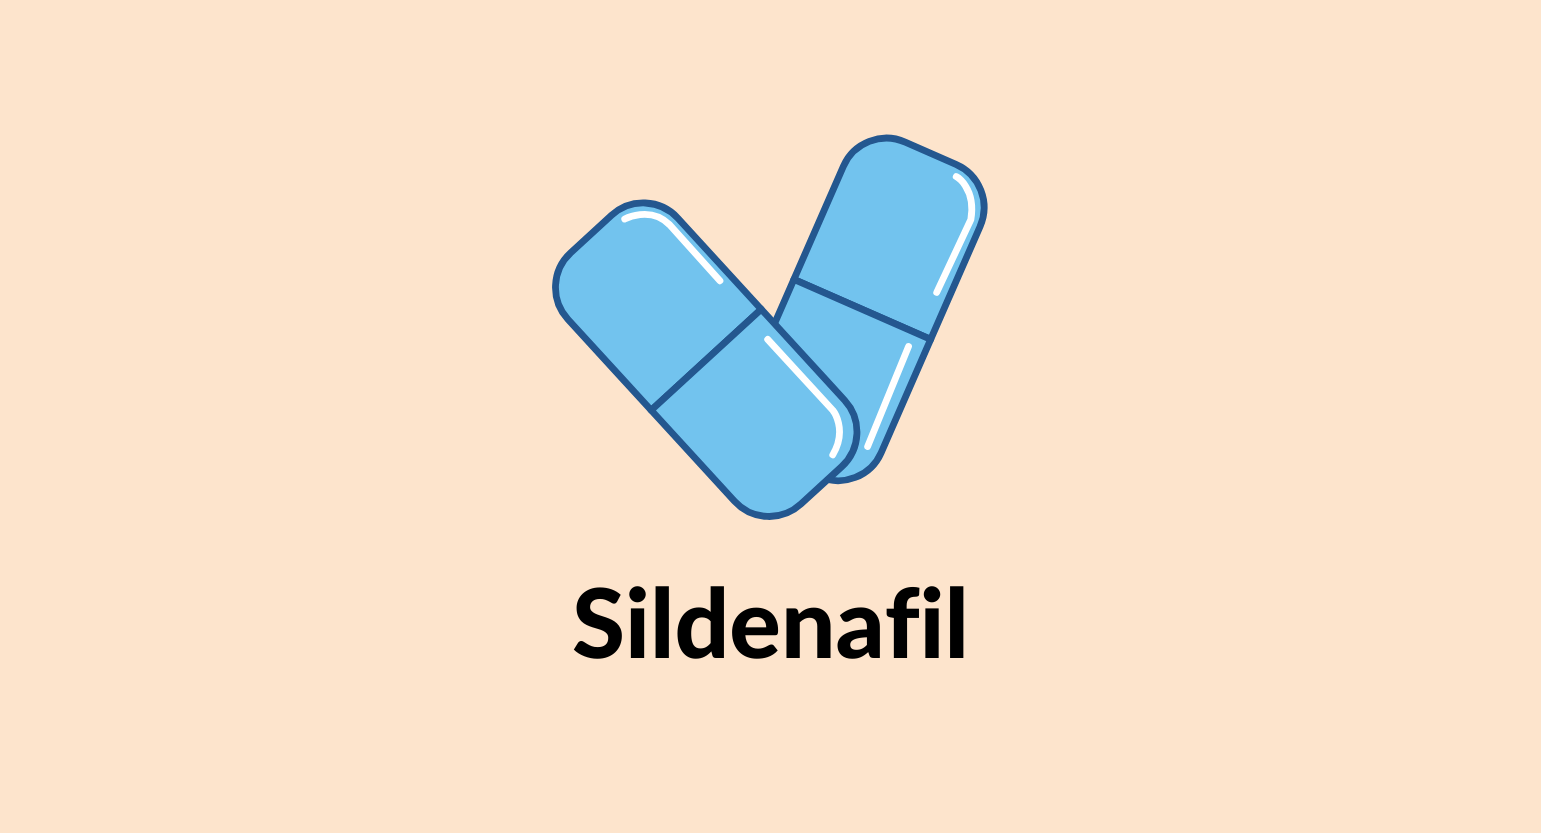 Sildenafil tablets (illustration)